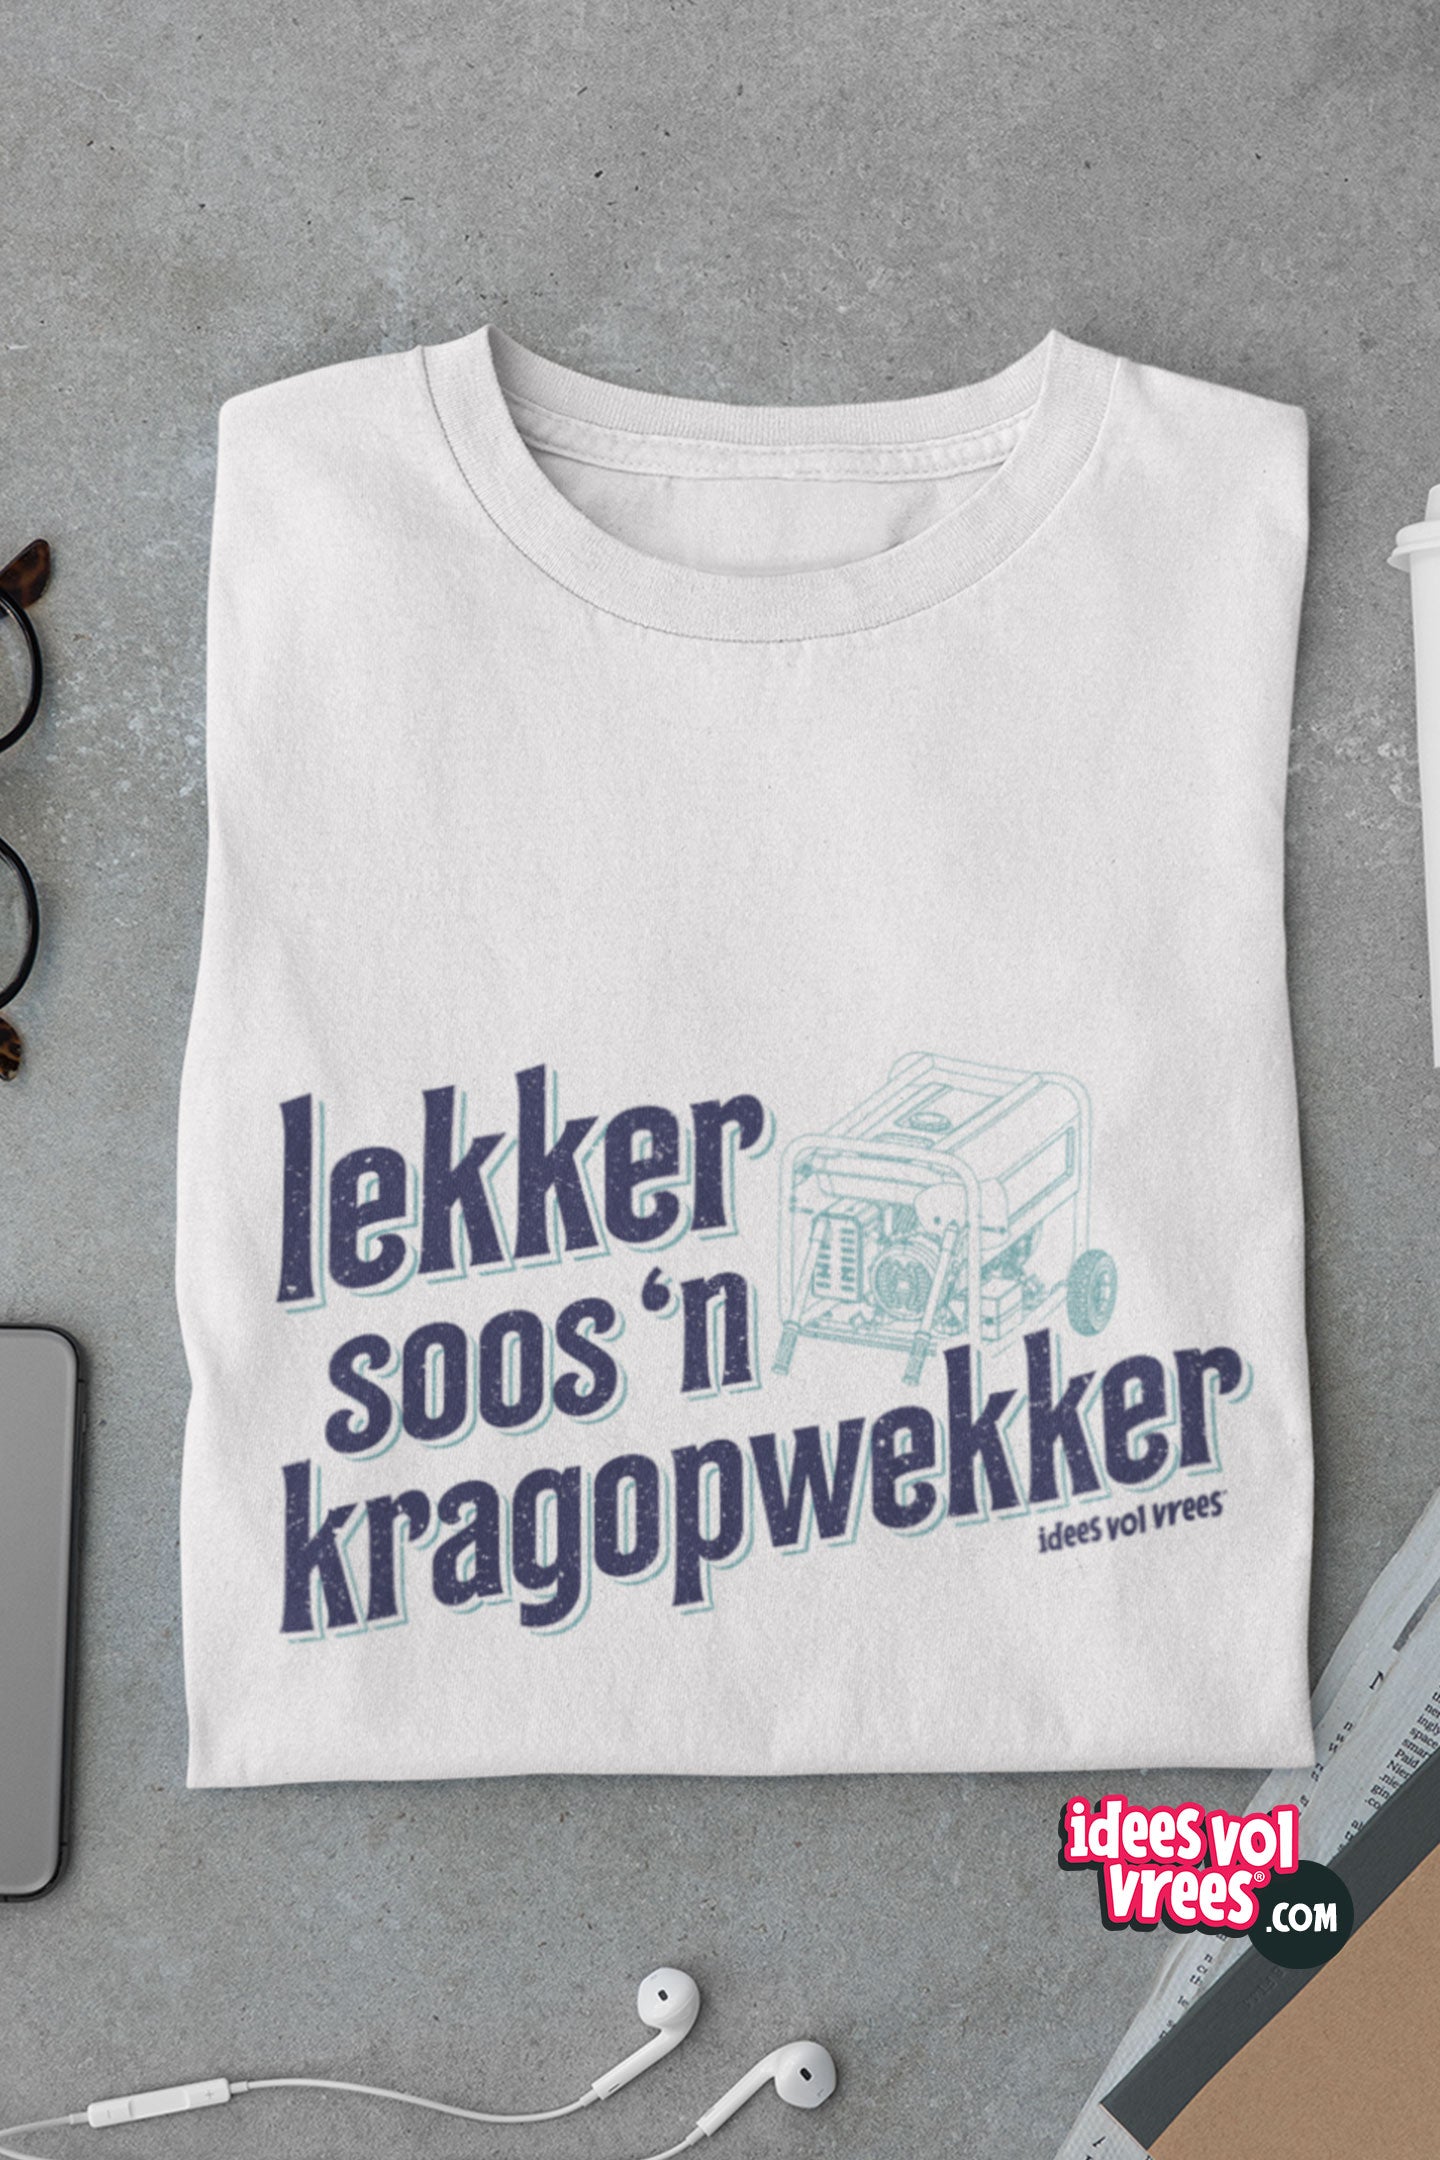 Idees Vol Vrees® Lekker Kragopwekker Women's T-shirt